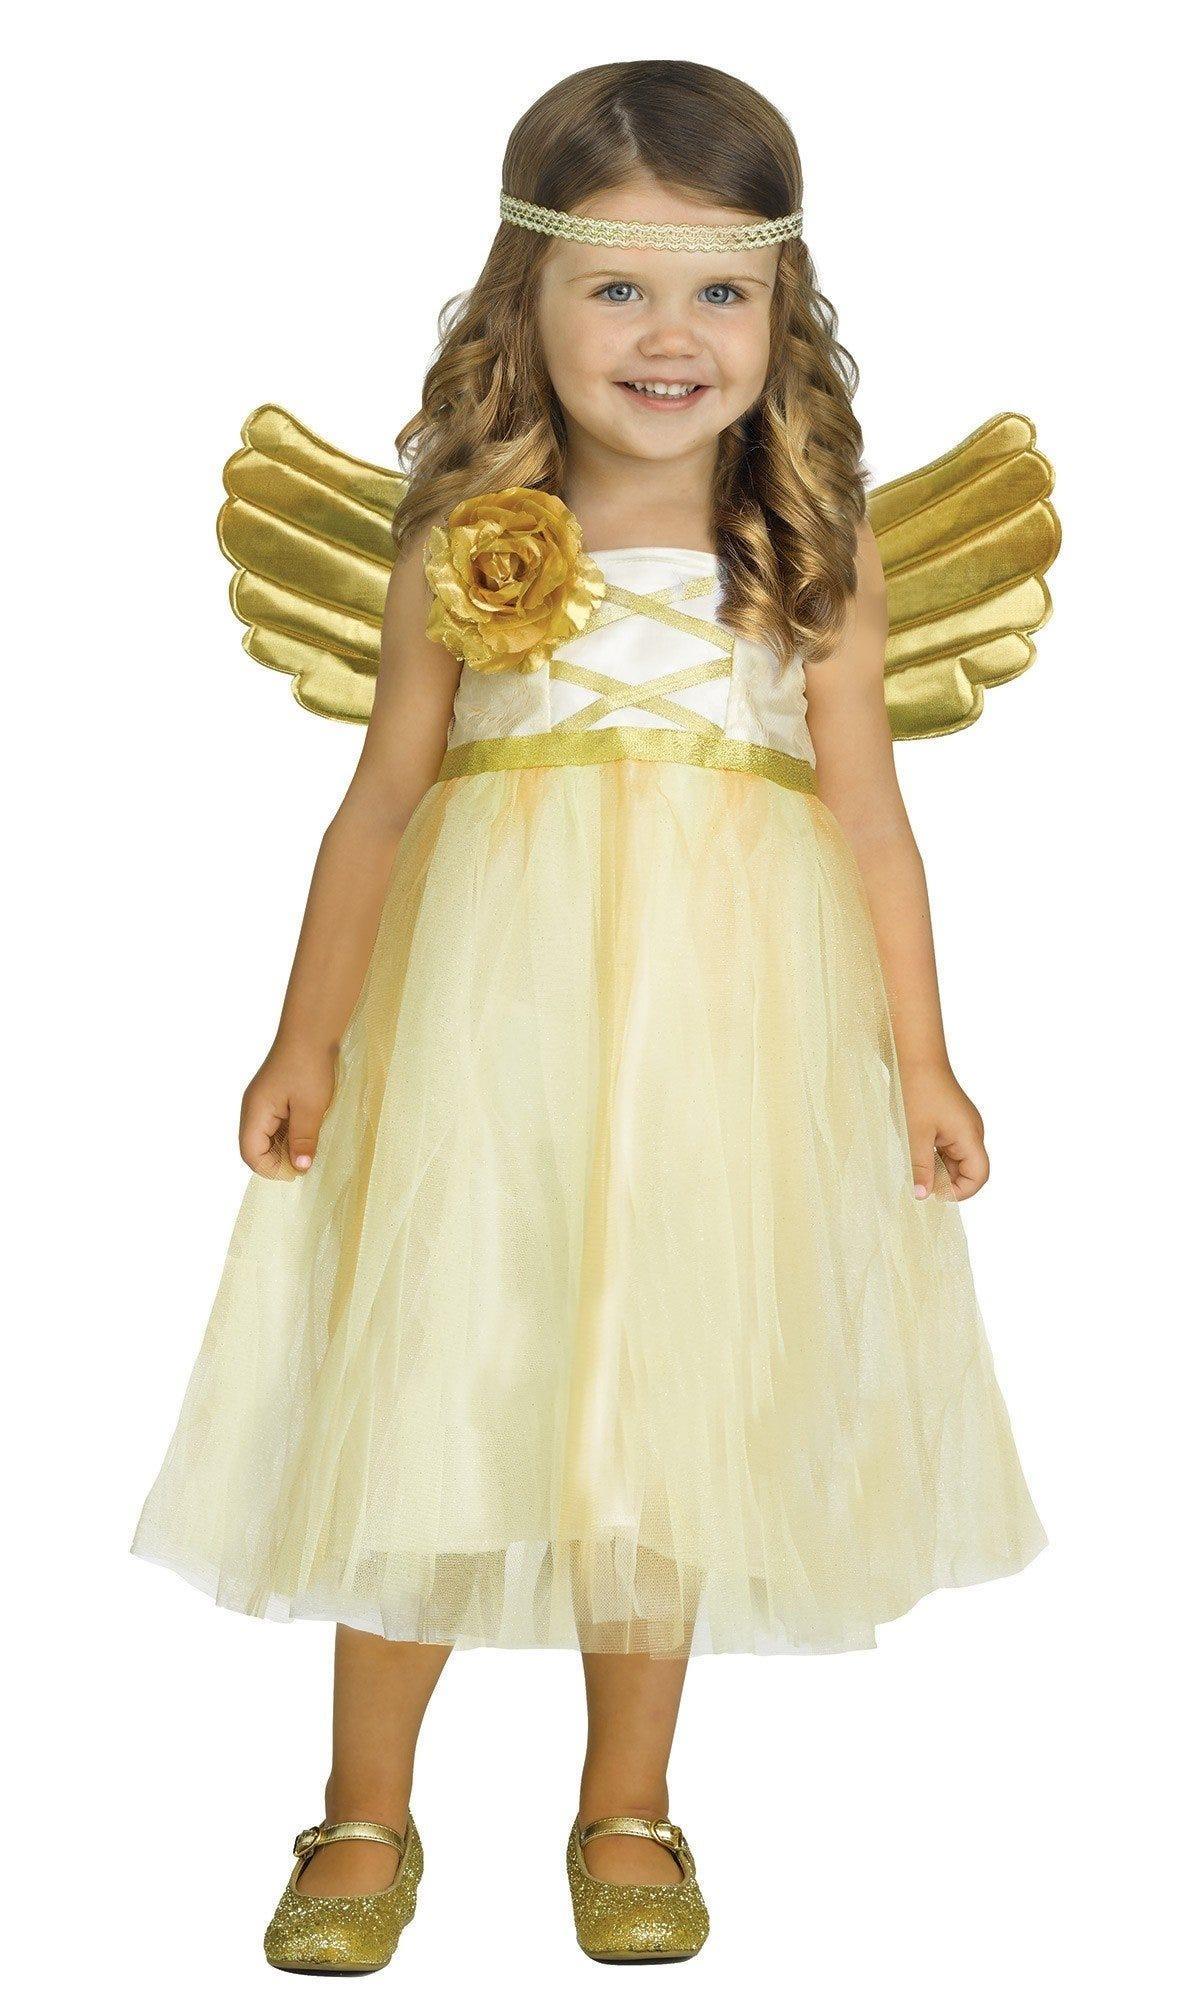 My Angel Baby Toddler Girls Costume